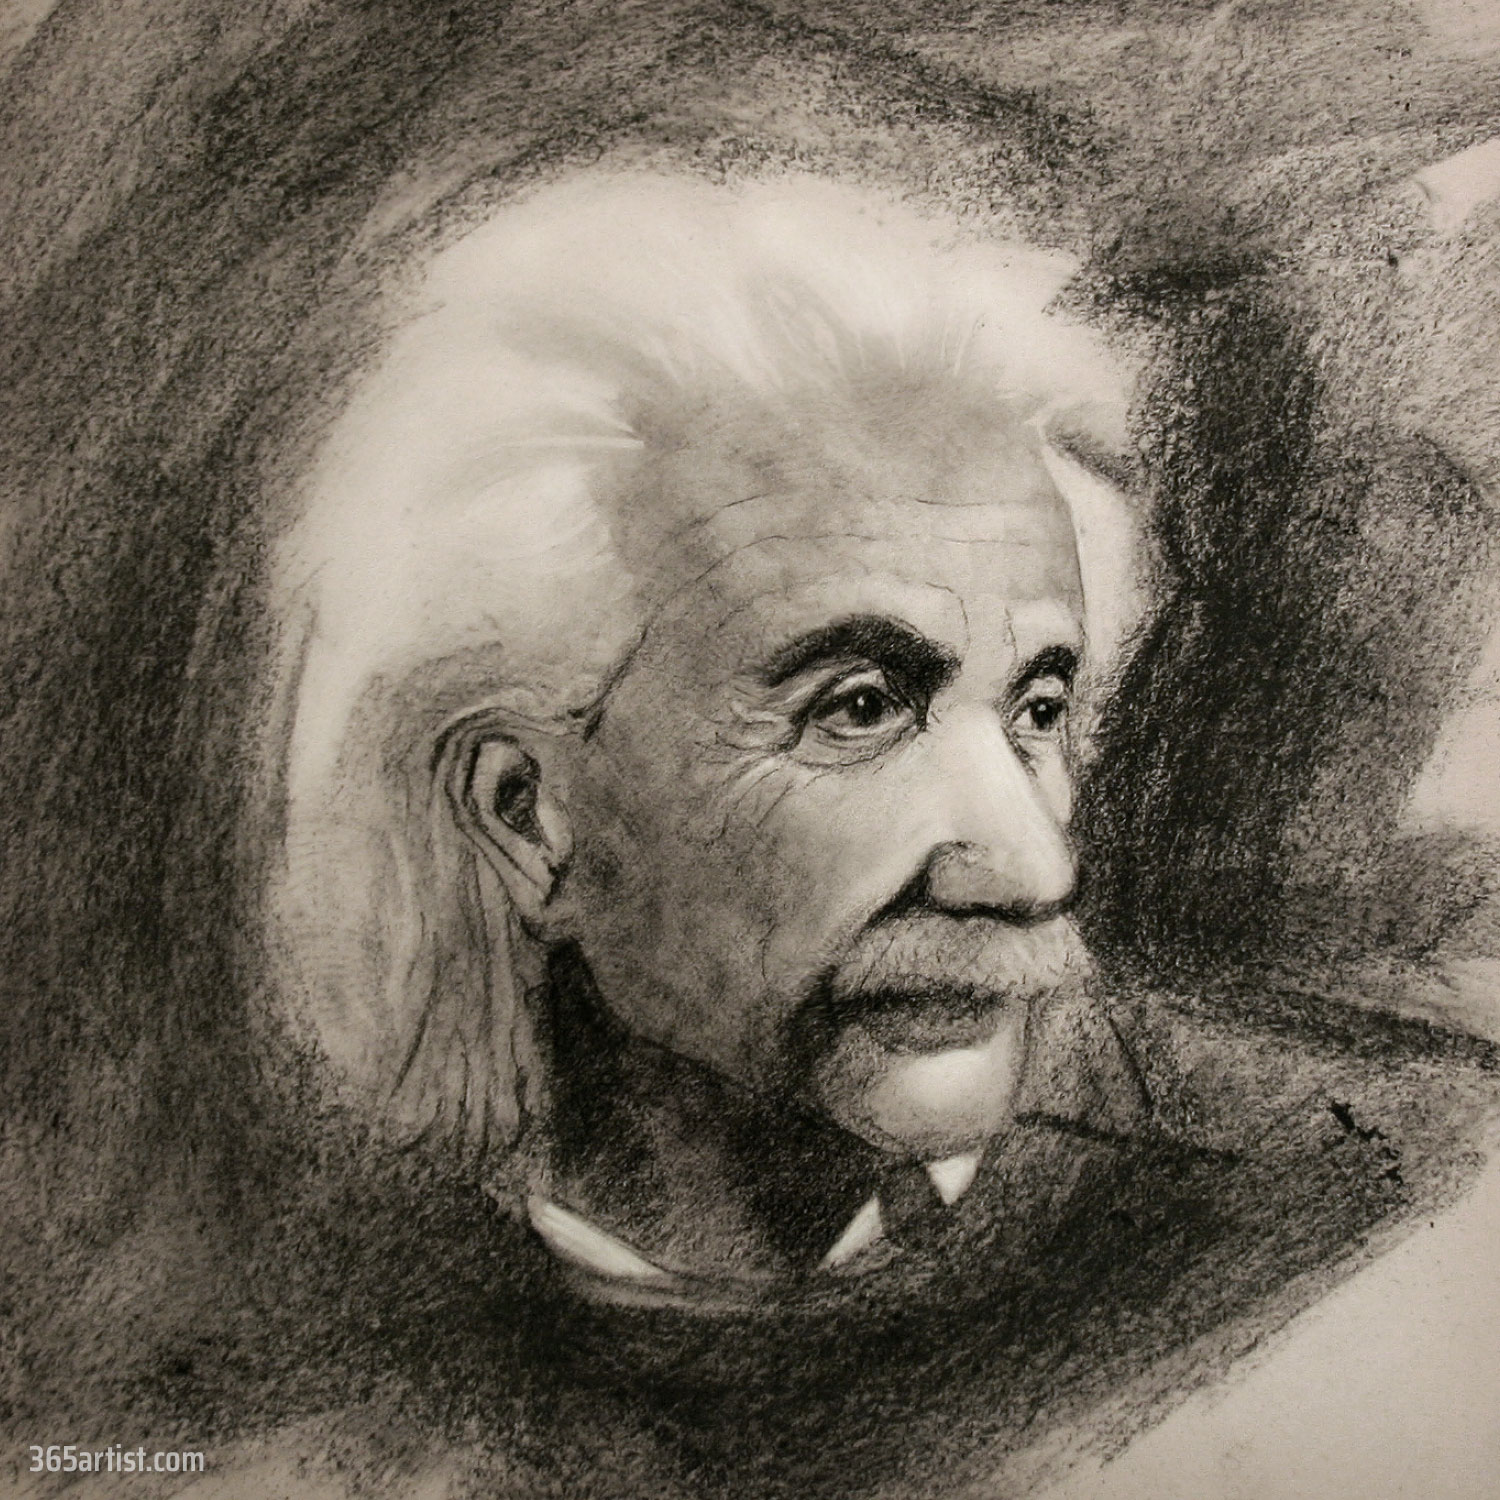 charcoal portrait drawing ofo Albert Einstein